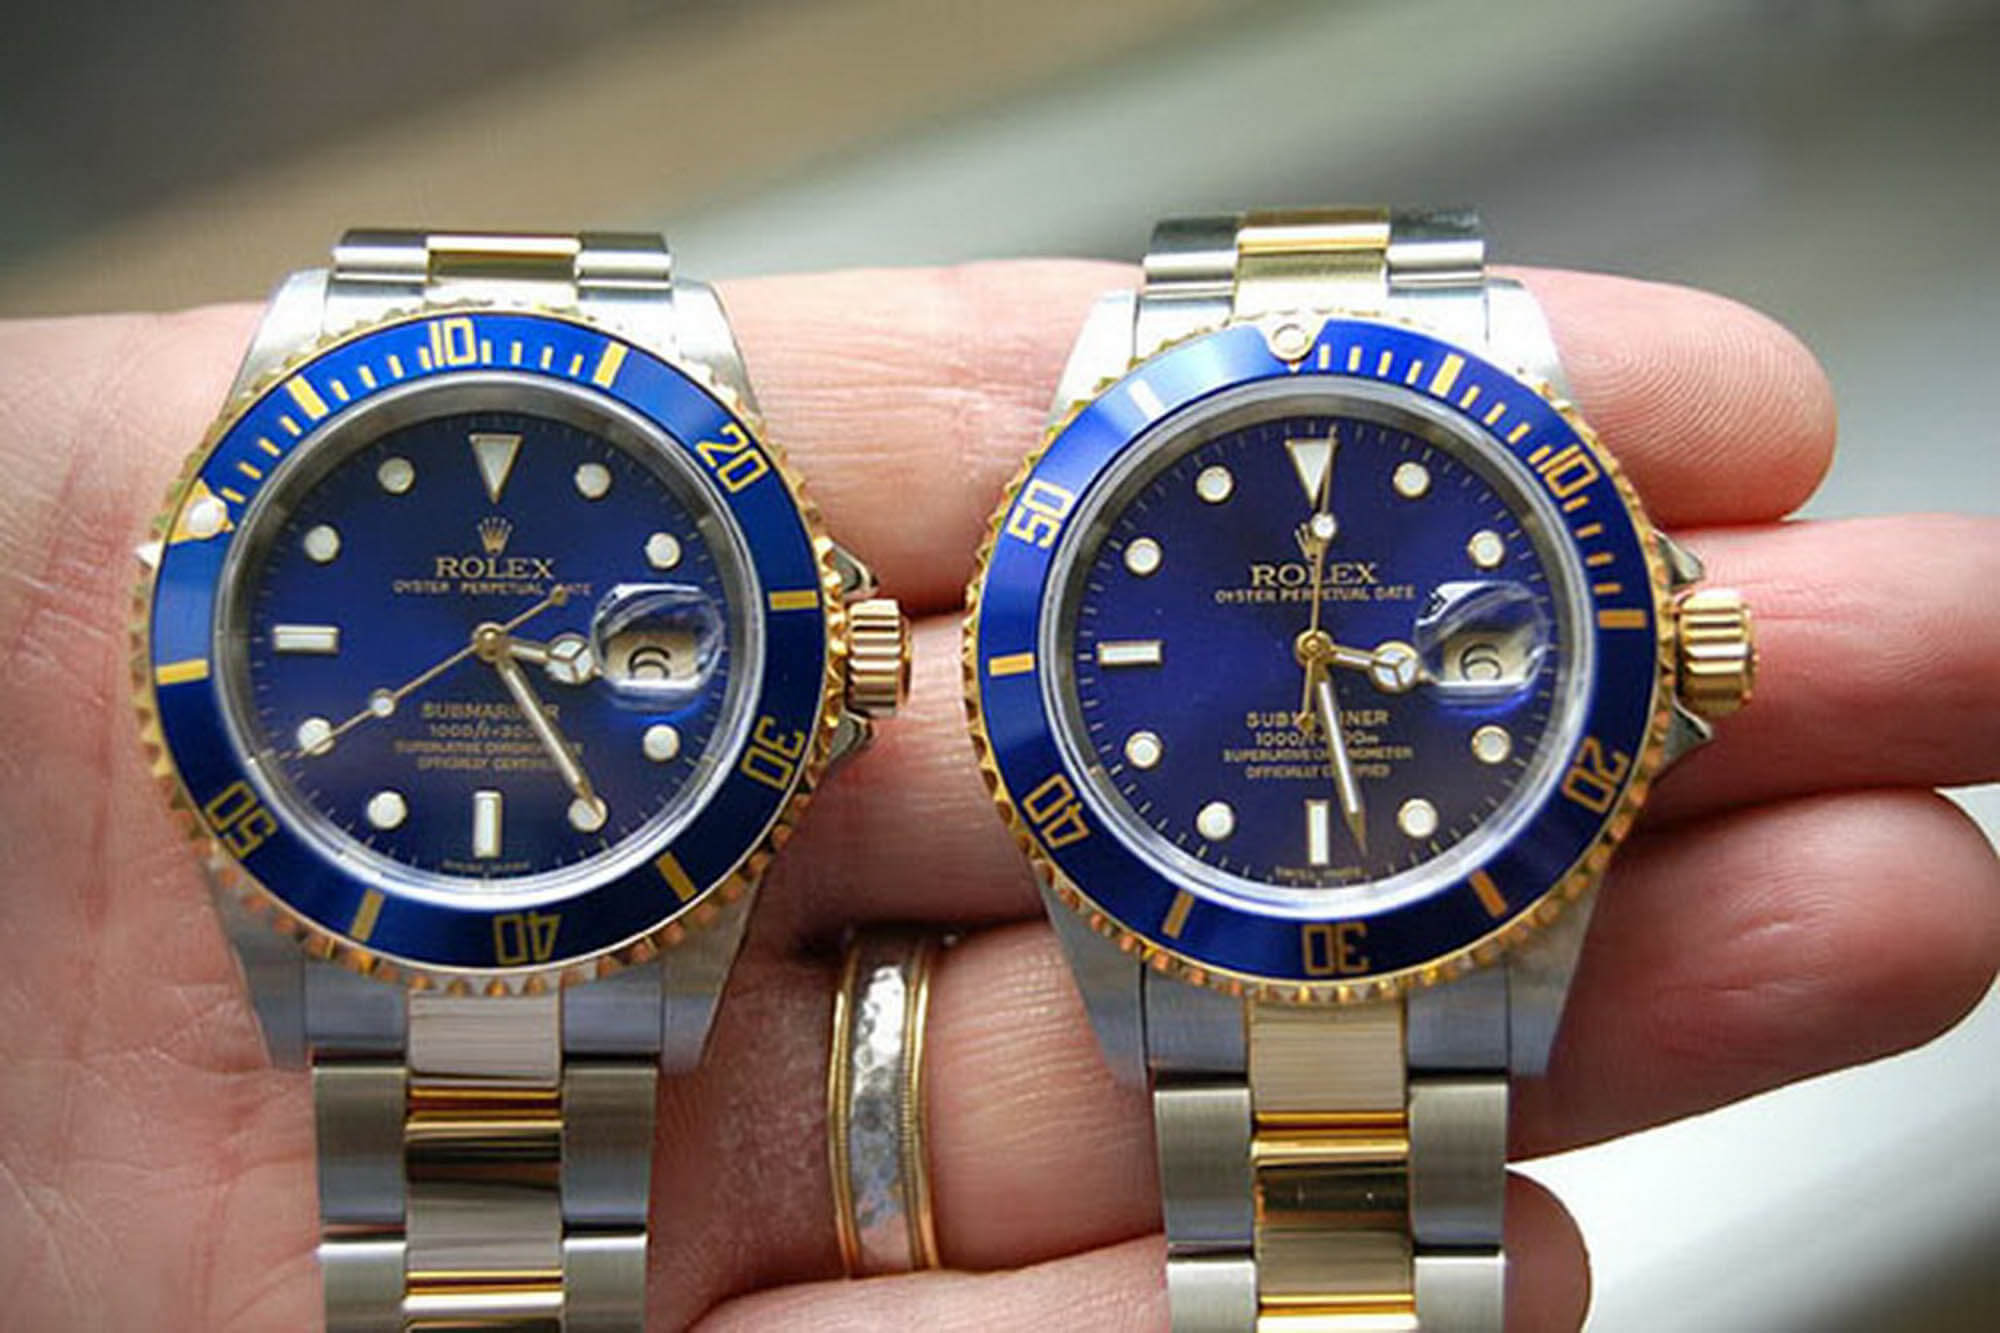 $67 Rolex Replica Watches, Best Fake Rolex With Genuine Swiss Movement Sale  Online – exact replica watches